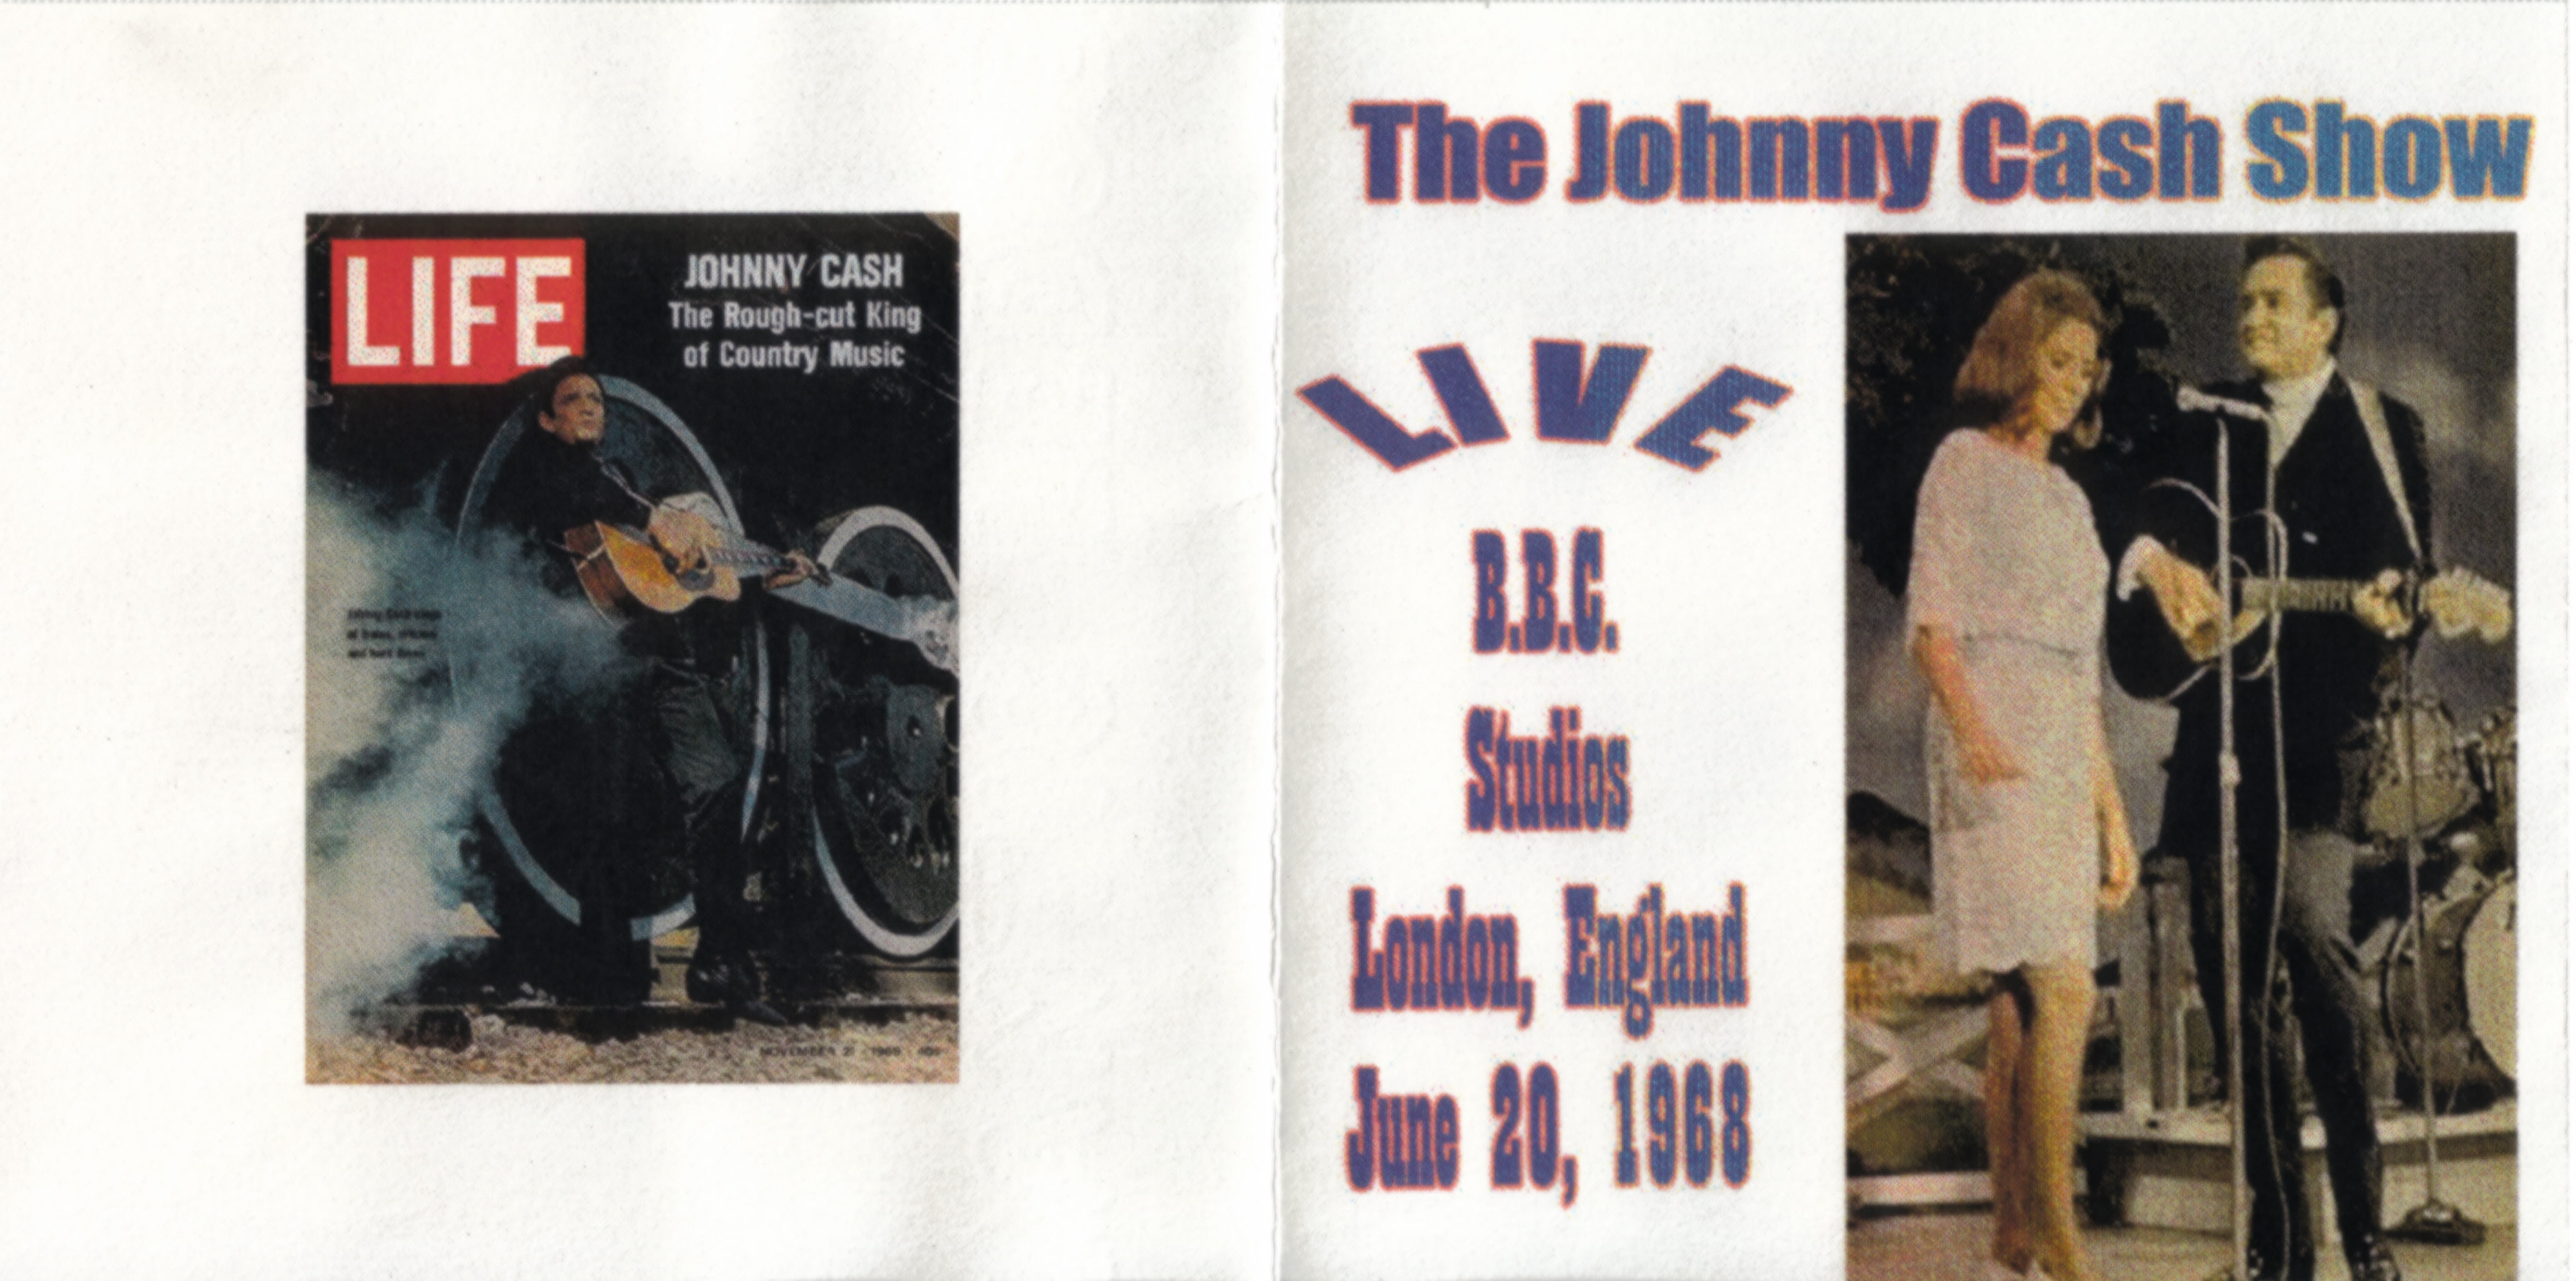 JohnnyCash1968-06-20LutherPerkinsTheTennesseeThreeCarlPerkinsJuneCarterCashBBC (2).jpg